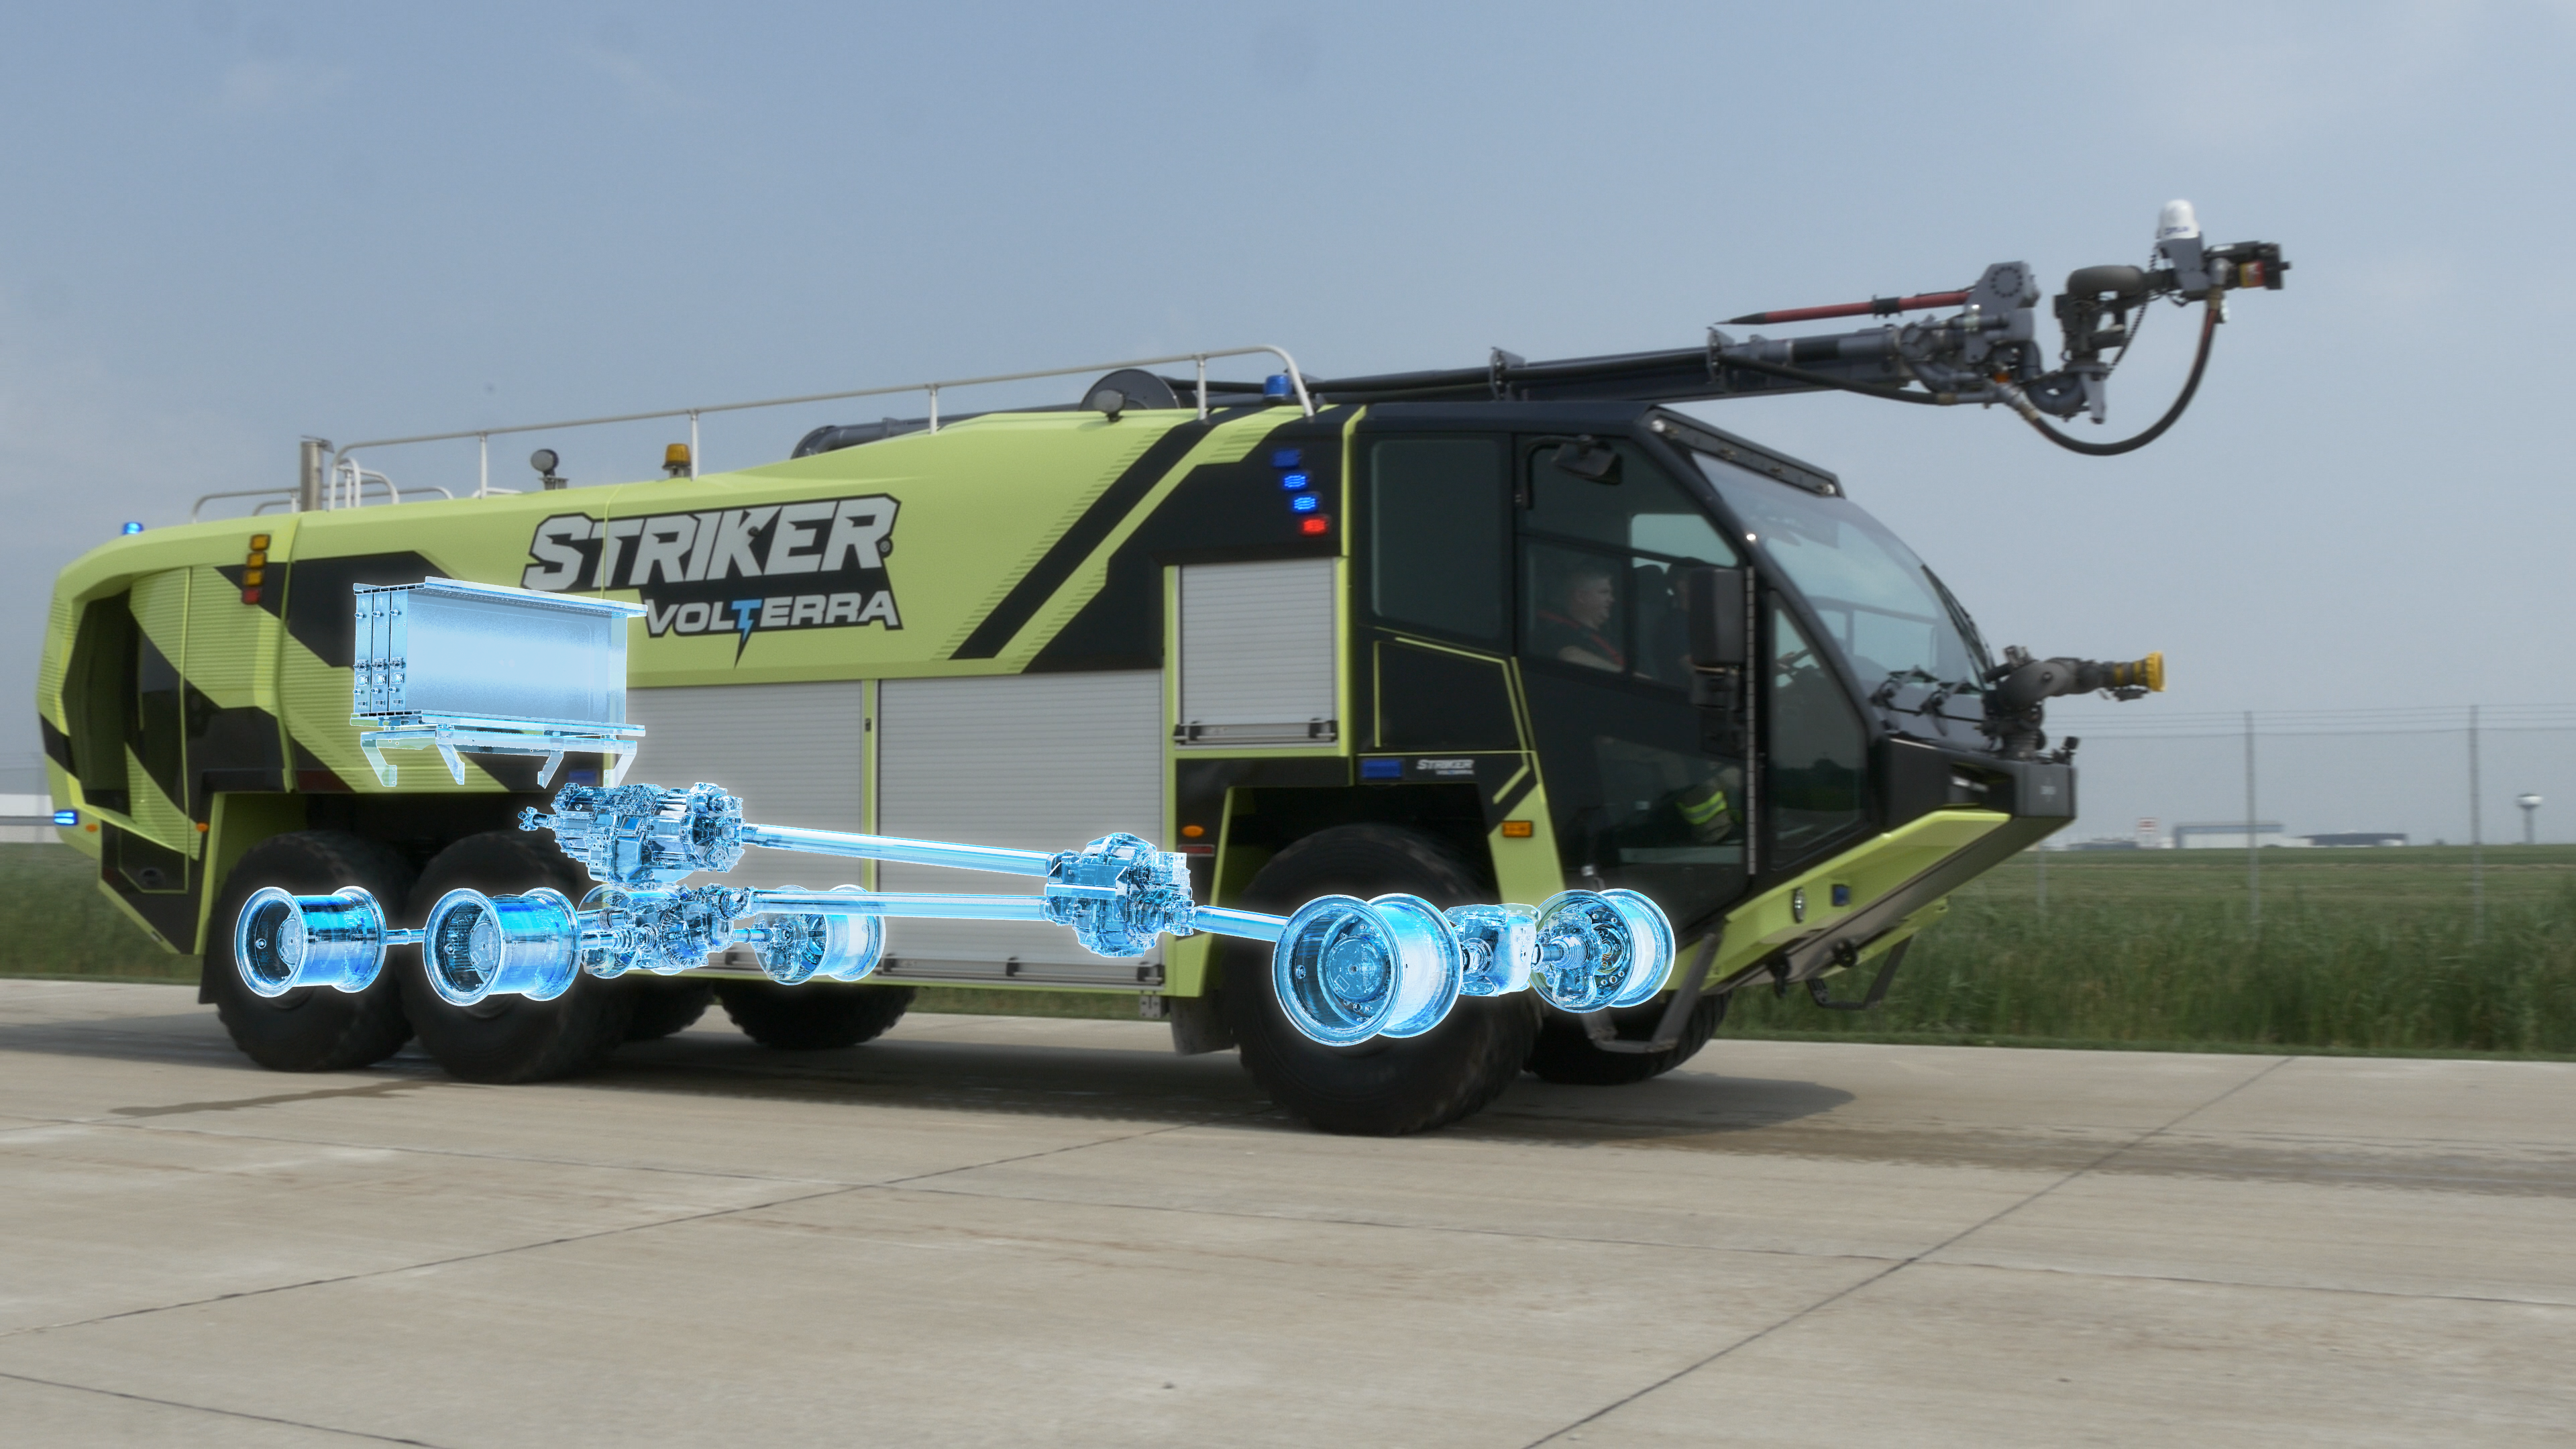 Xray graphic showing the regenerative braking system inside the Striker Volterra hybrid electric ARFF truck